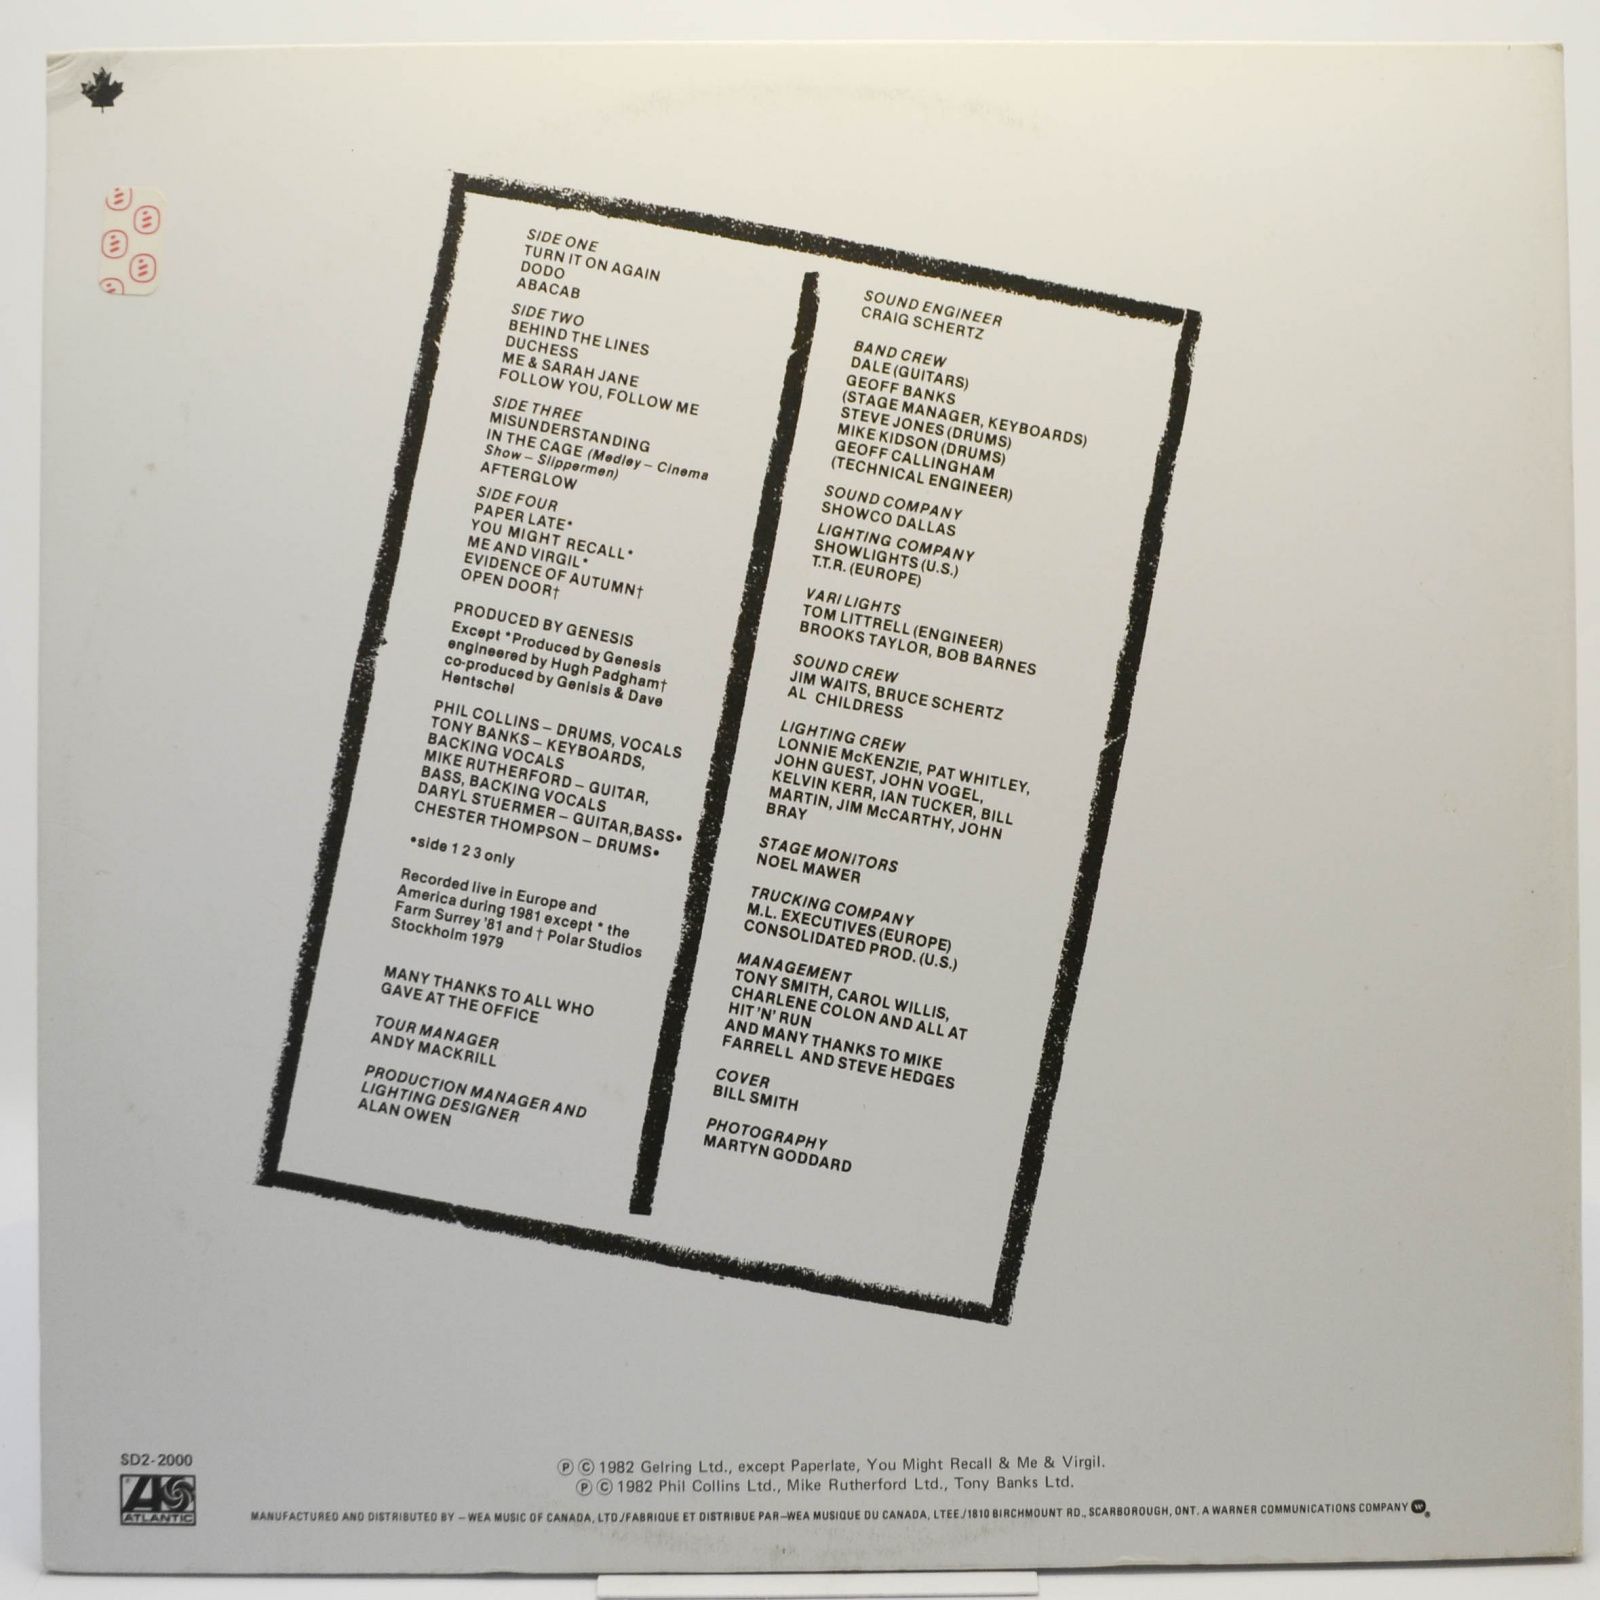 Genesis — Three Sides Live (2LP), 1982